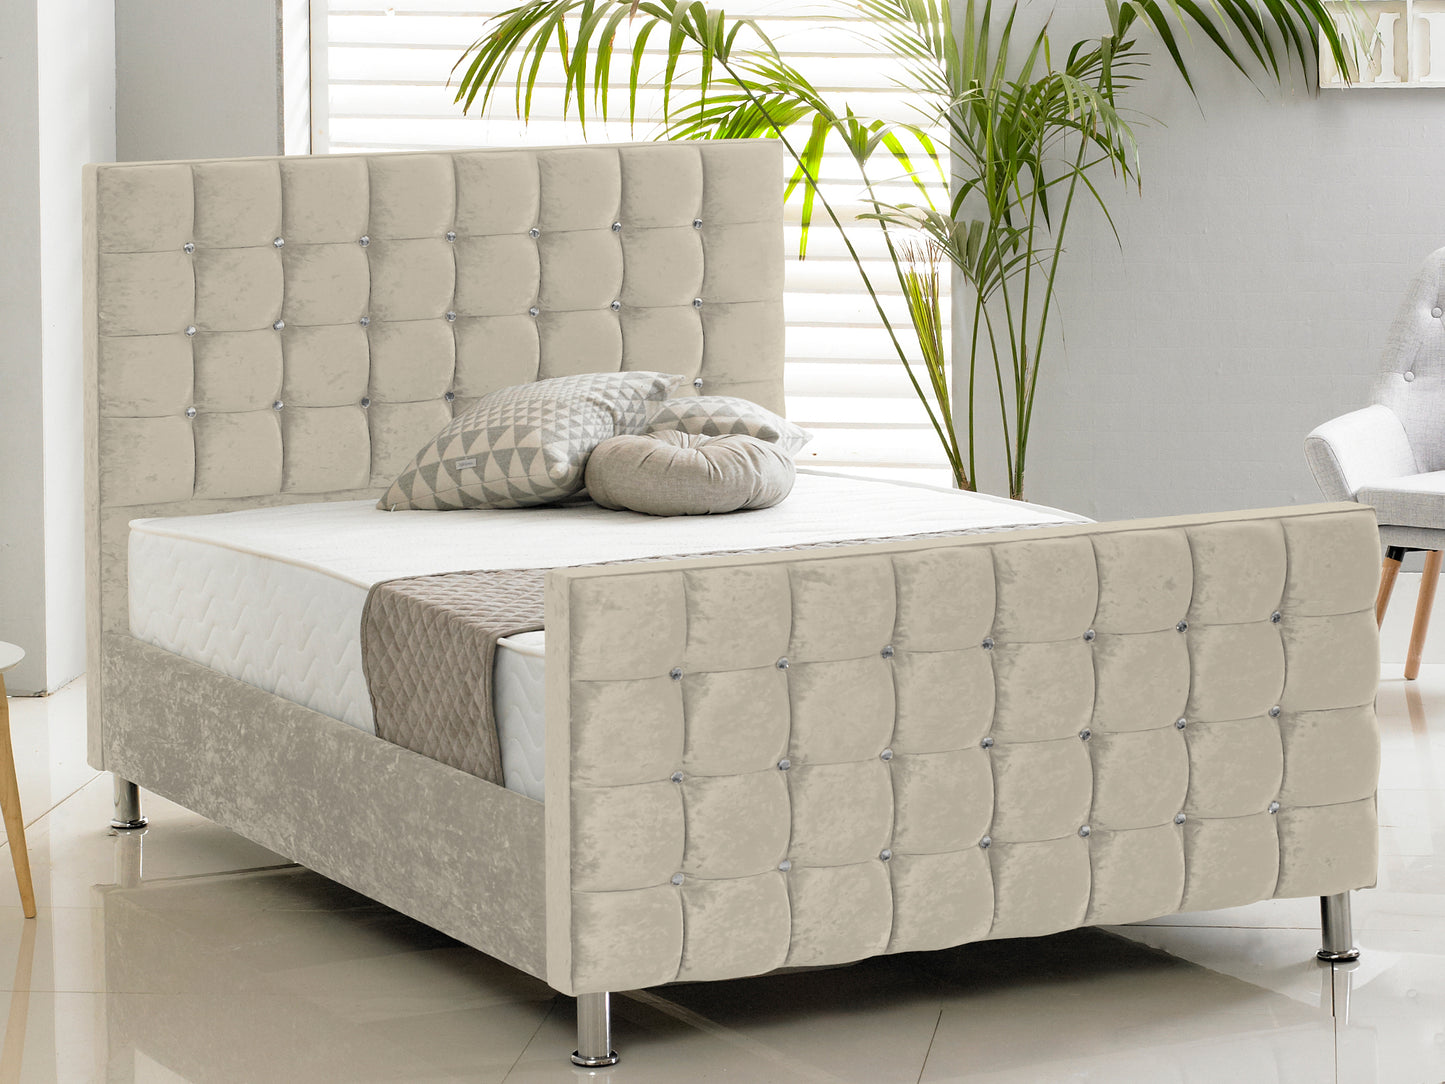 Kensington Luxury Bed Frame in Crushed Cream